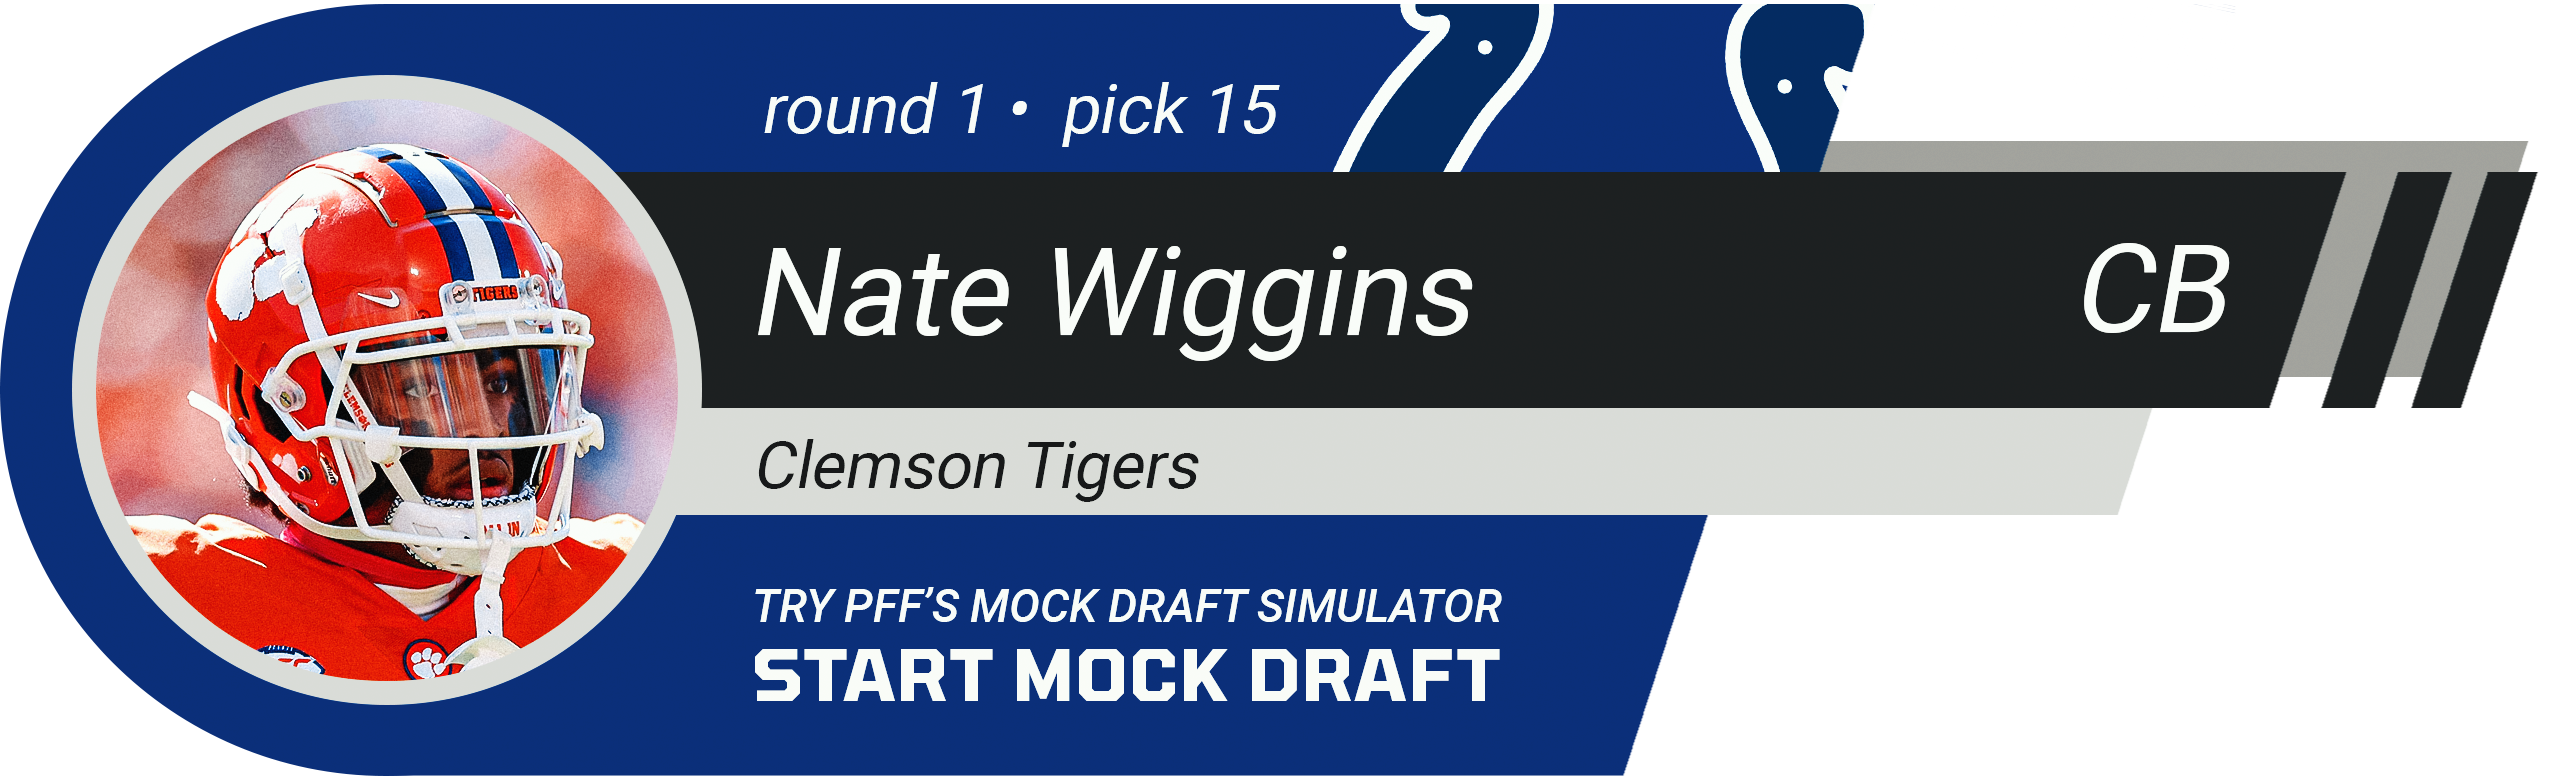 Indianapolis Colts: Nate Wiggins, CB, Clemson